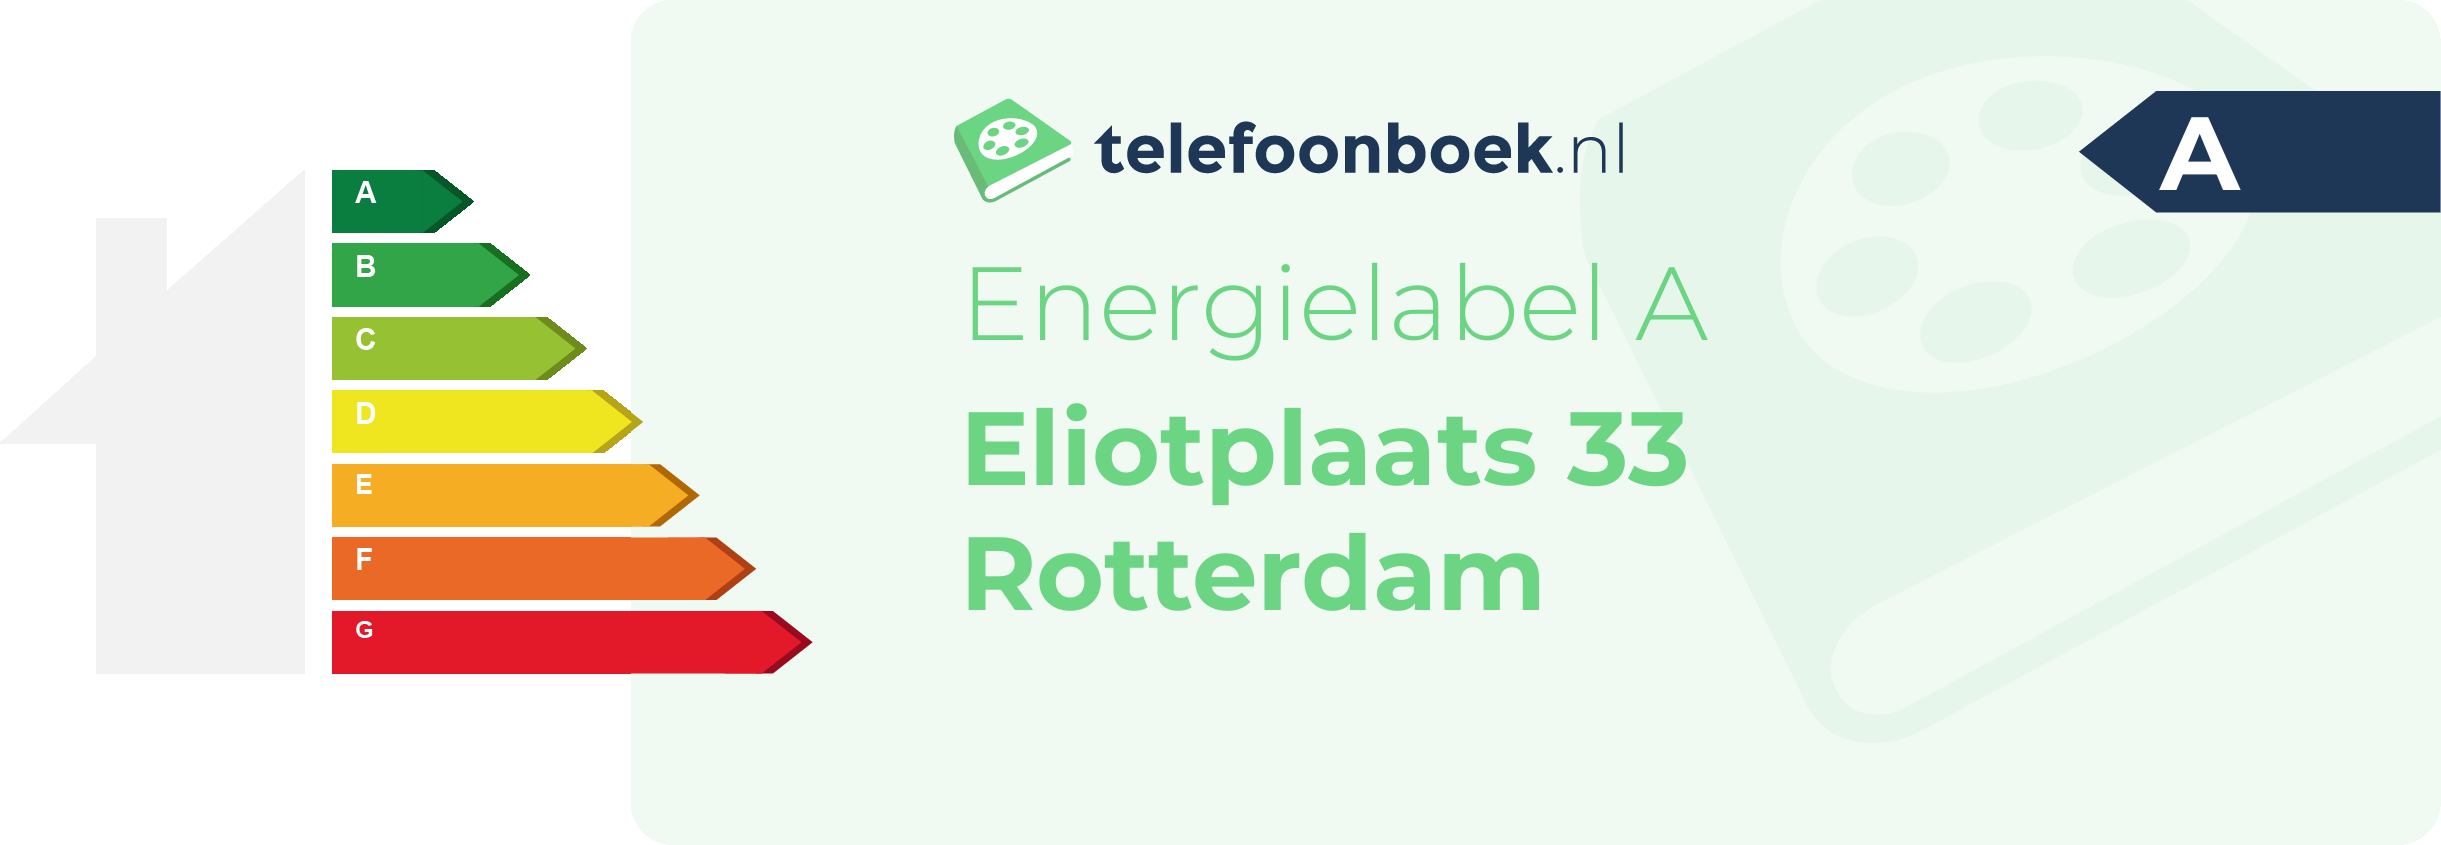 Energielabel Eliotplaats 33 Rotterdam